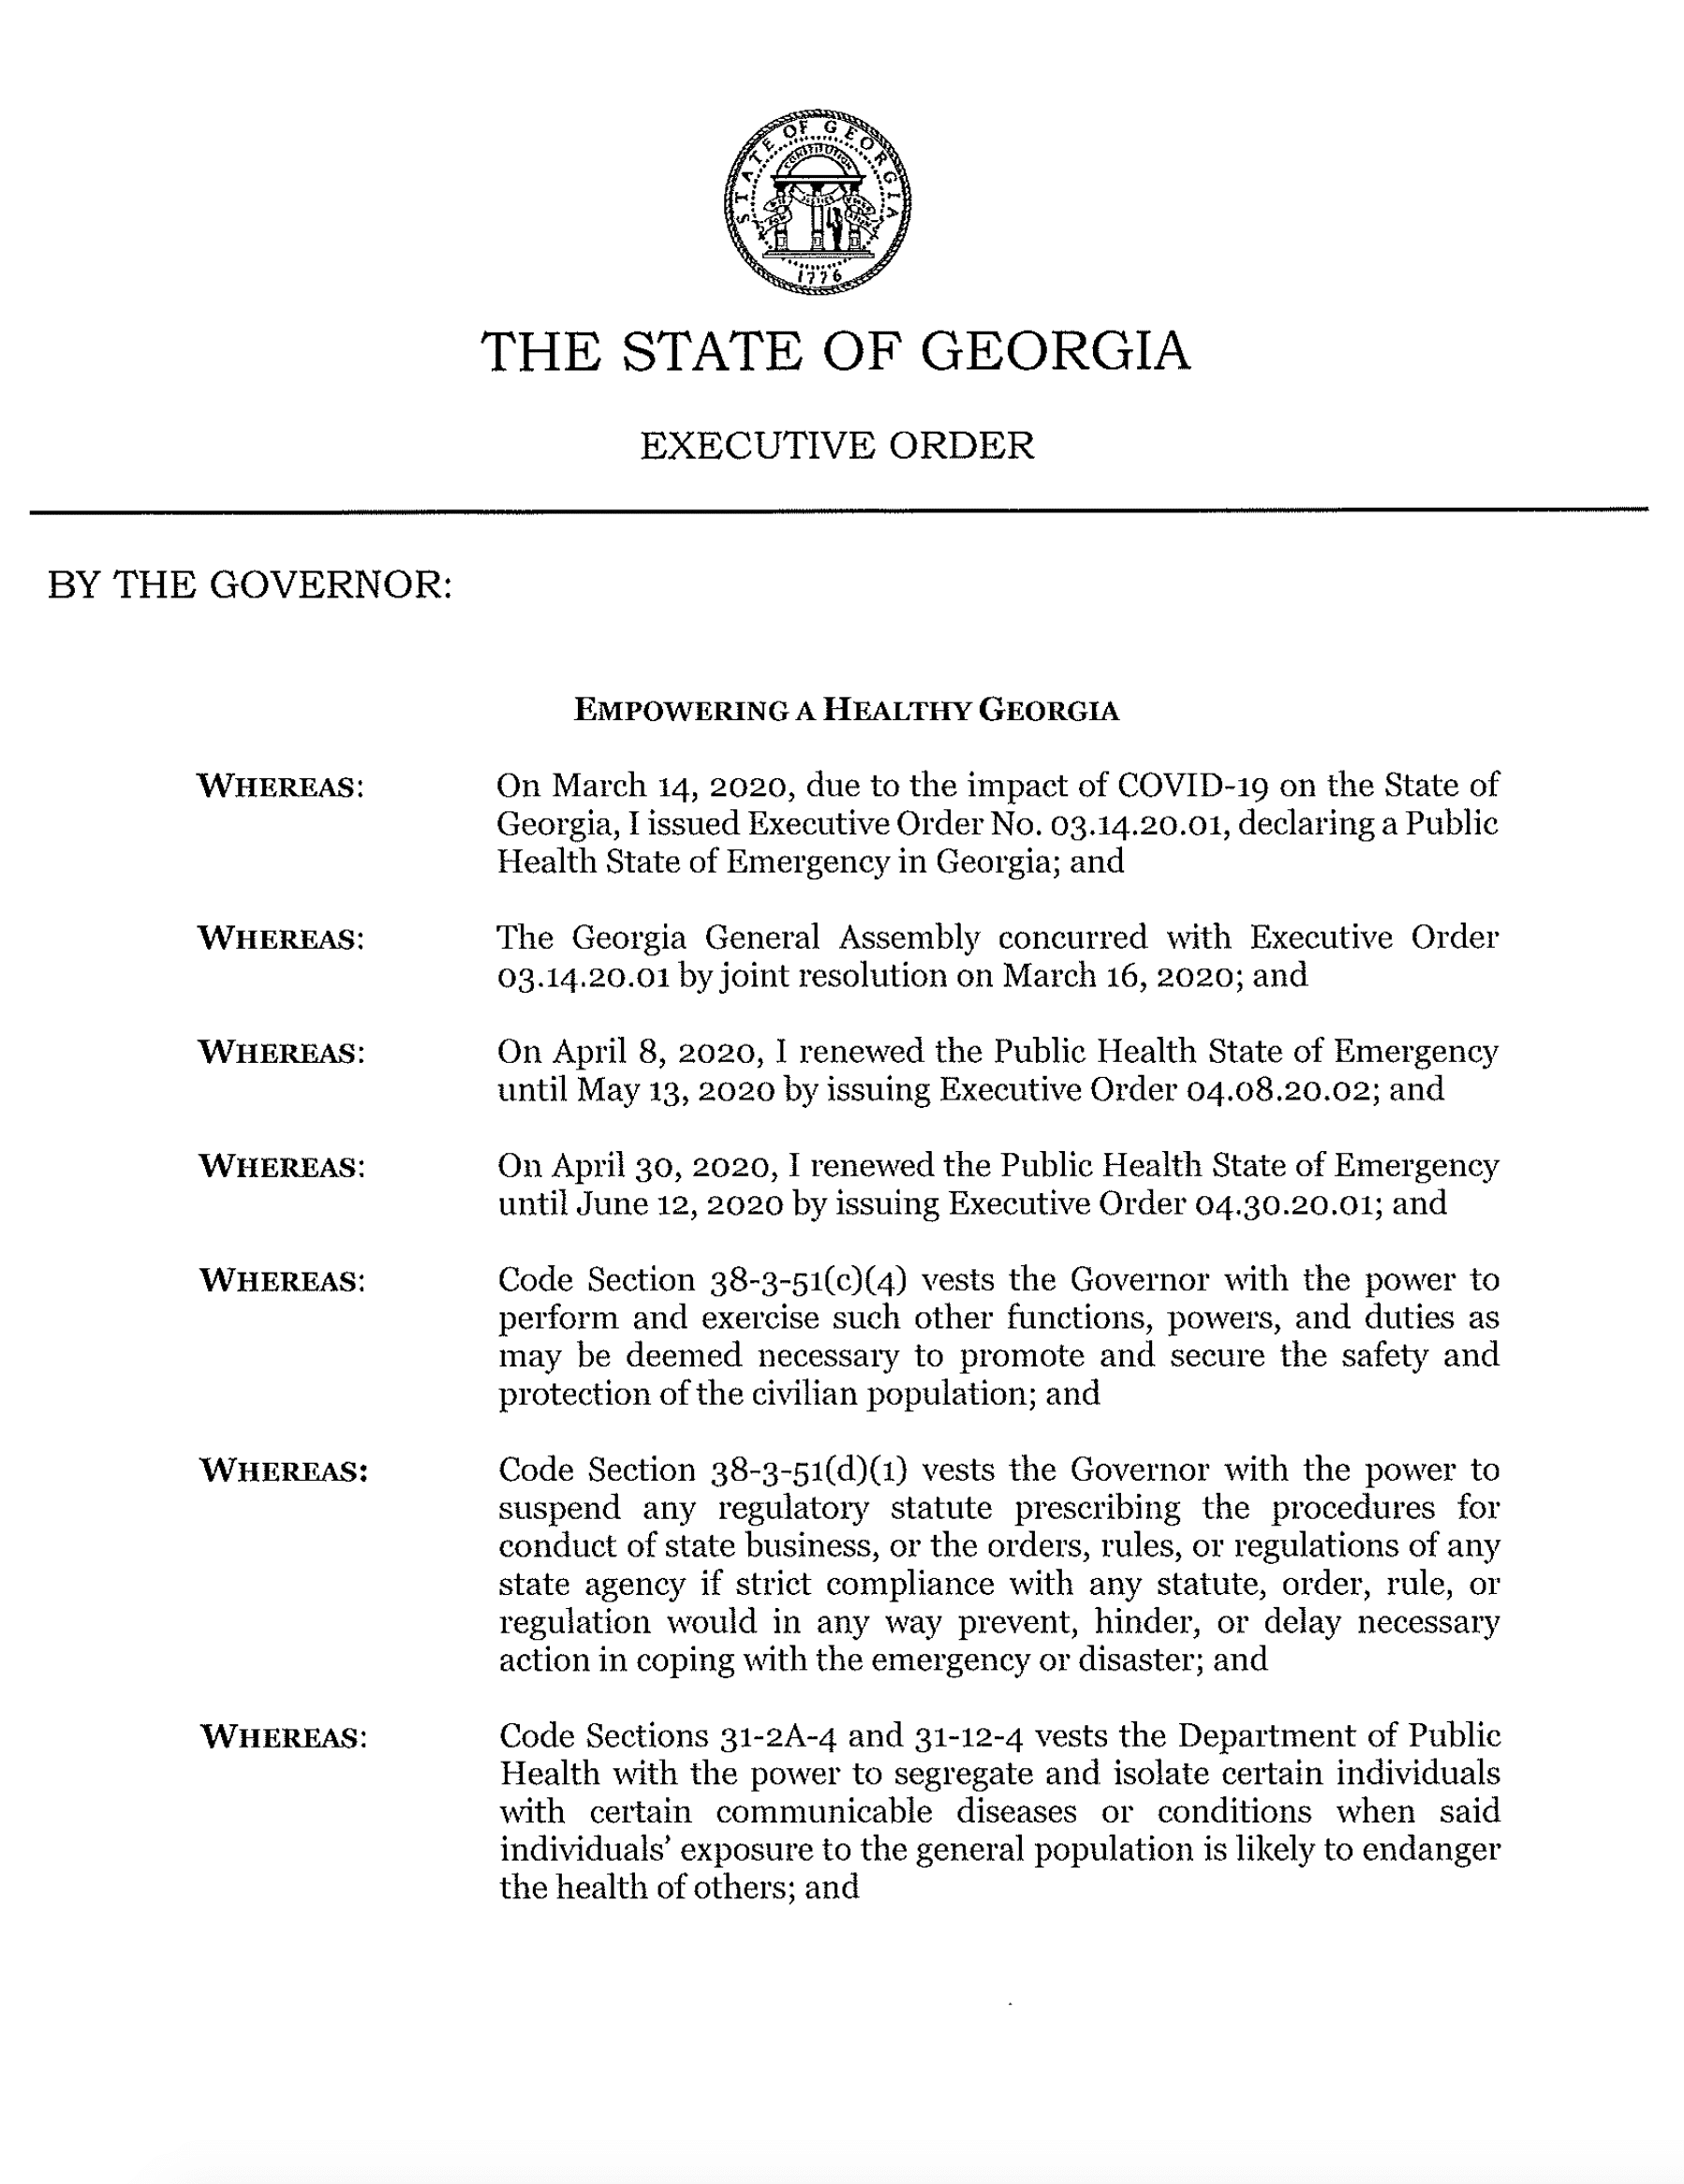 The State of Georgia - Executive Order